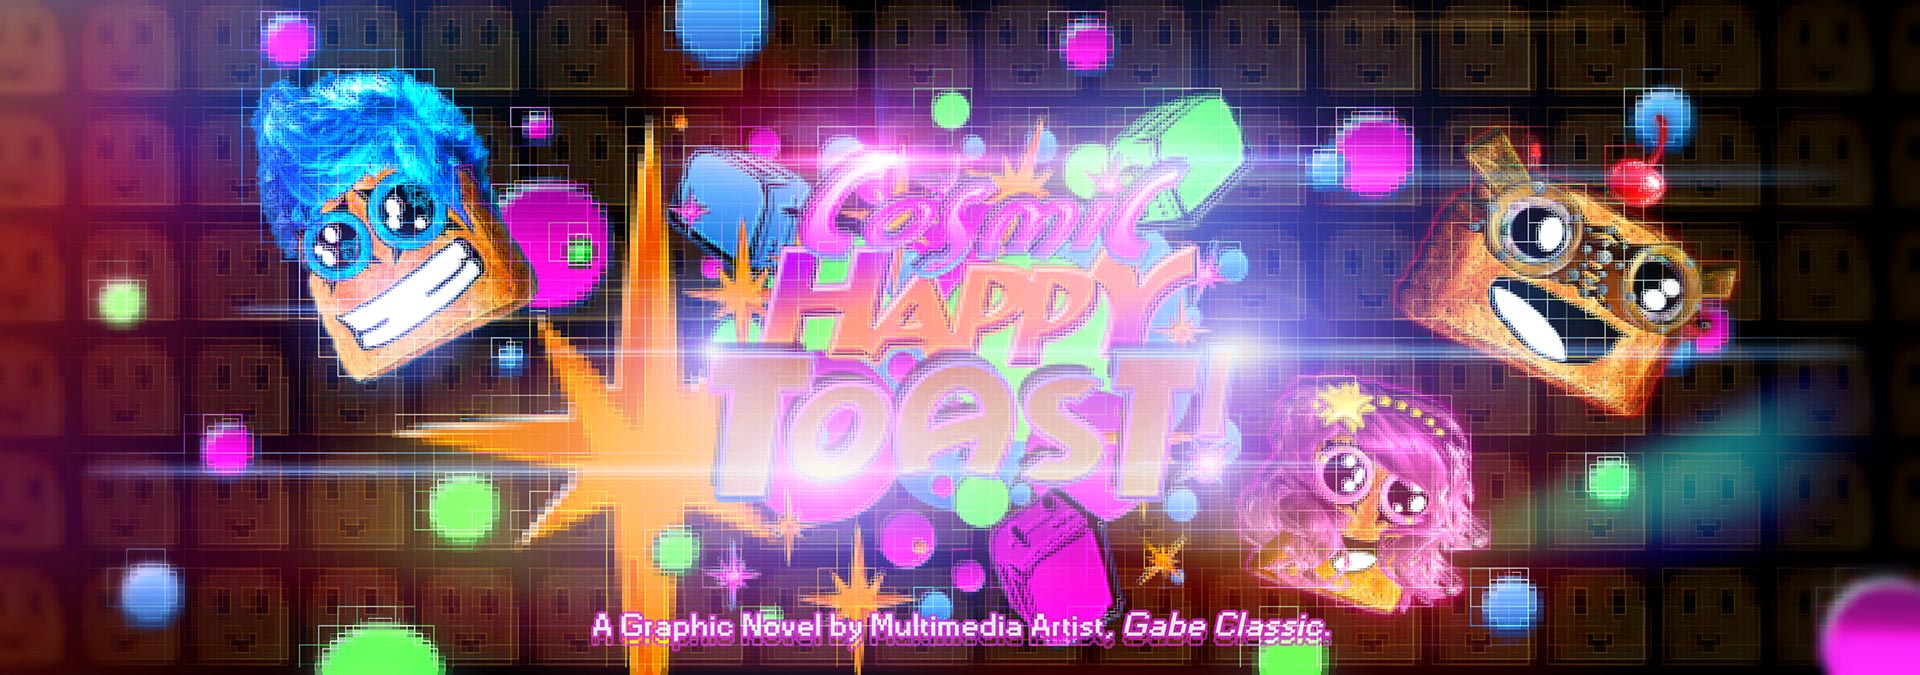 Cosmic Happy Toast: A Graphic Novel by Gabe Classic | Copyright 2020 Gabriel Wexler aka. Gabe Classic